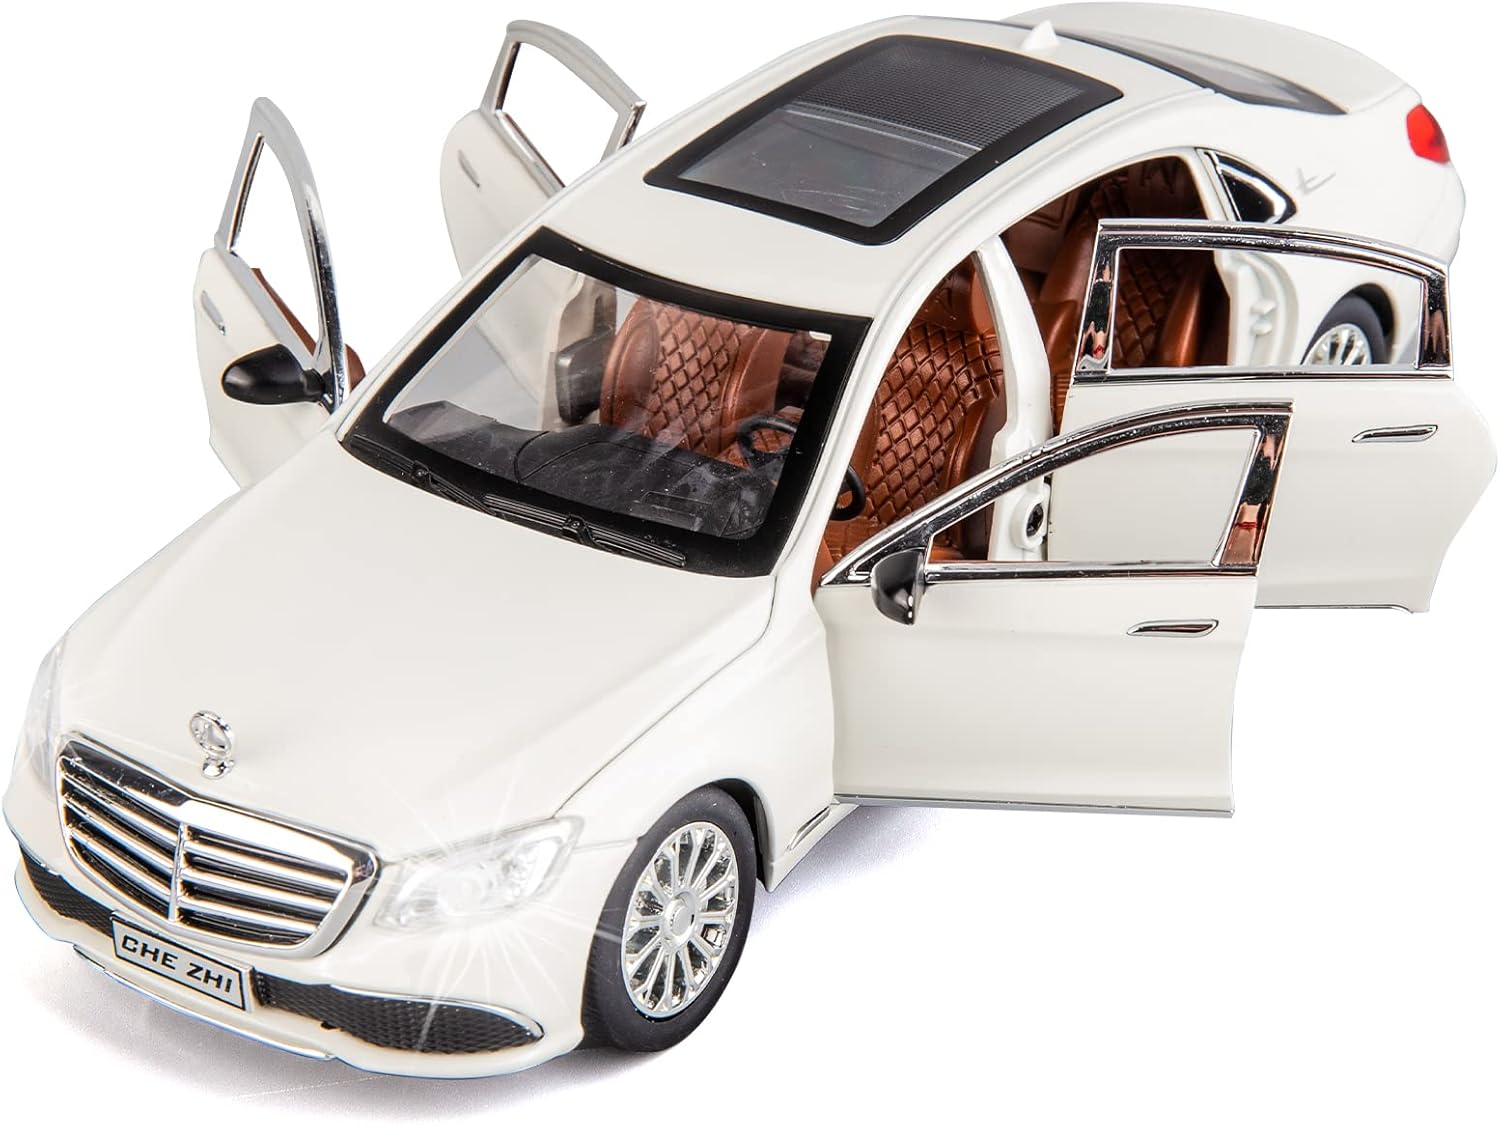 CHE ZHI Toy Car Diecast 1:24 Scale Mercedes Benz Toy Car Alloy - White